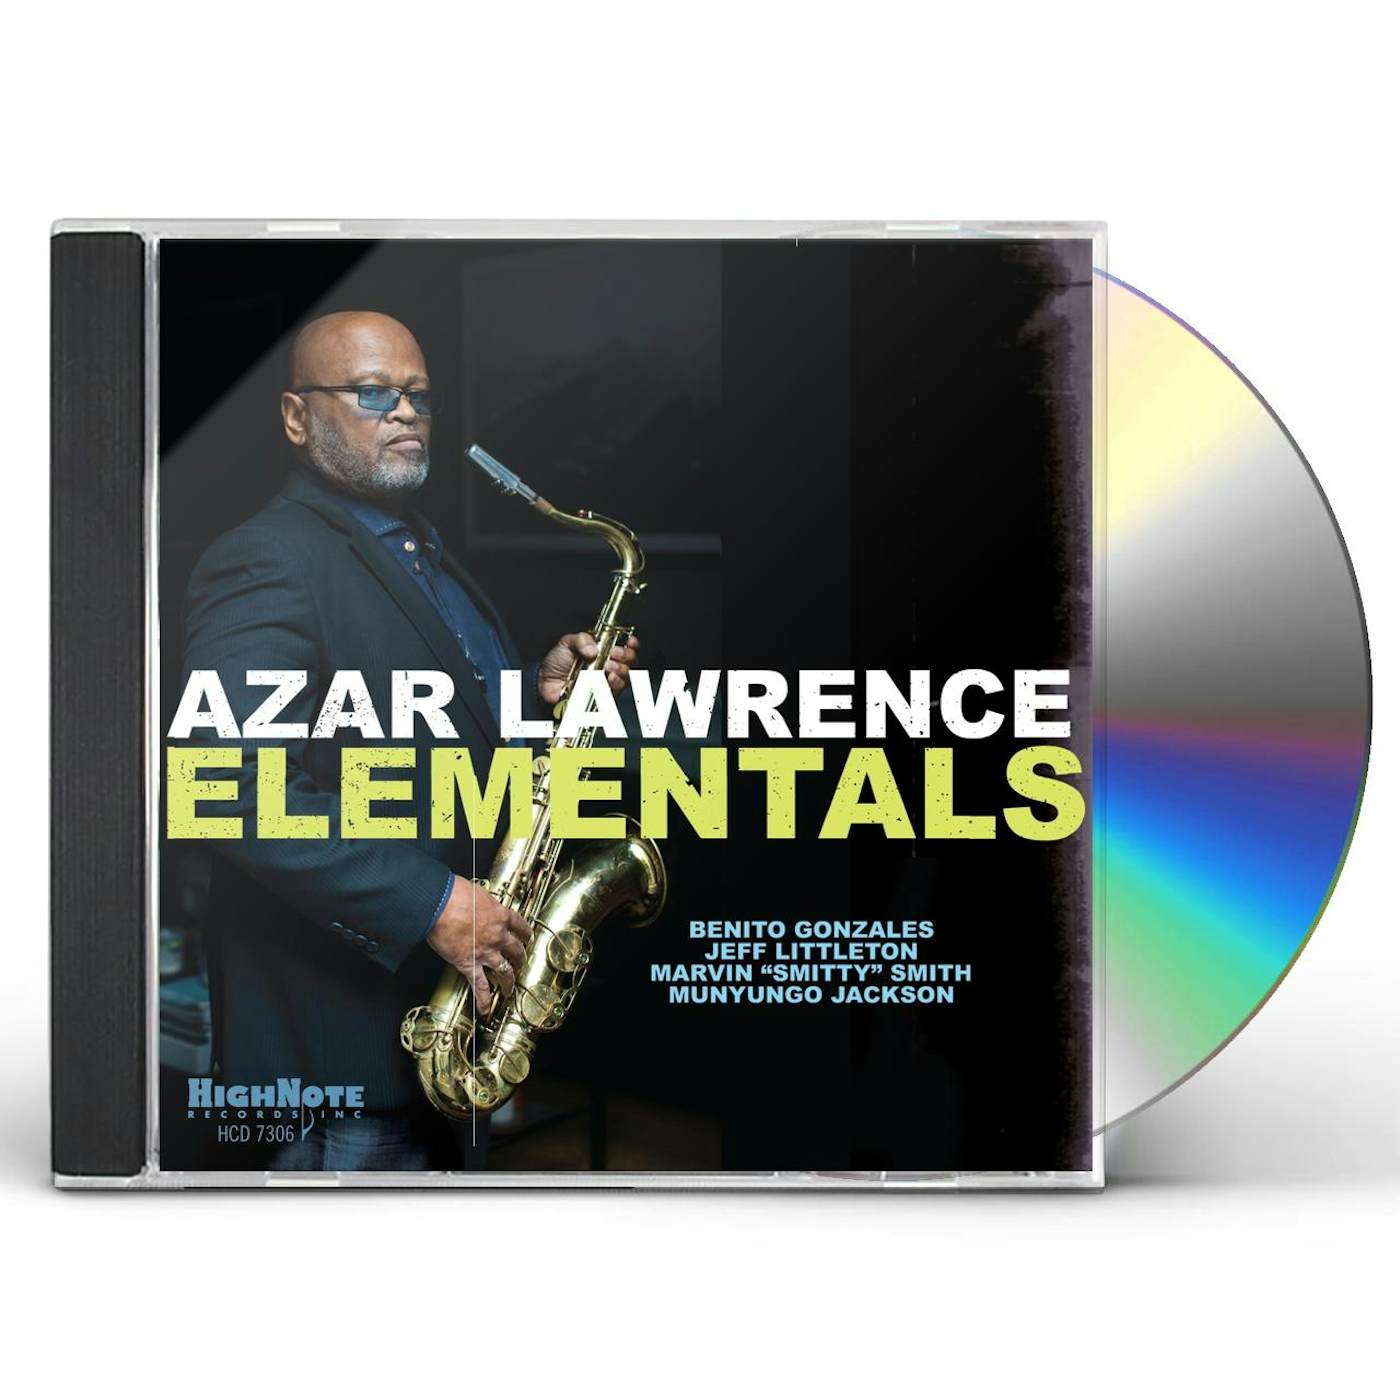 Azar Lawrence ELEMENTALS CD